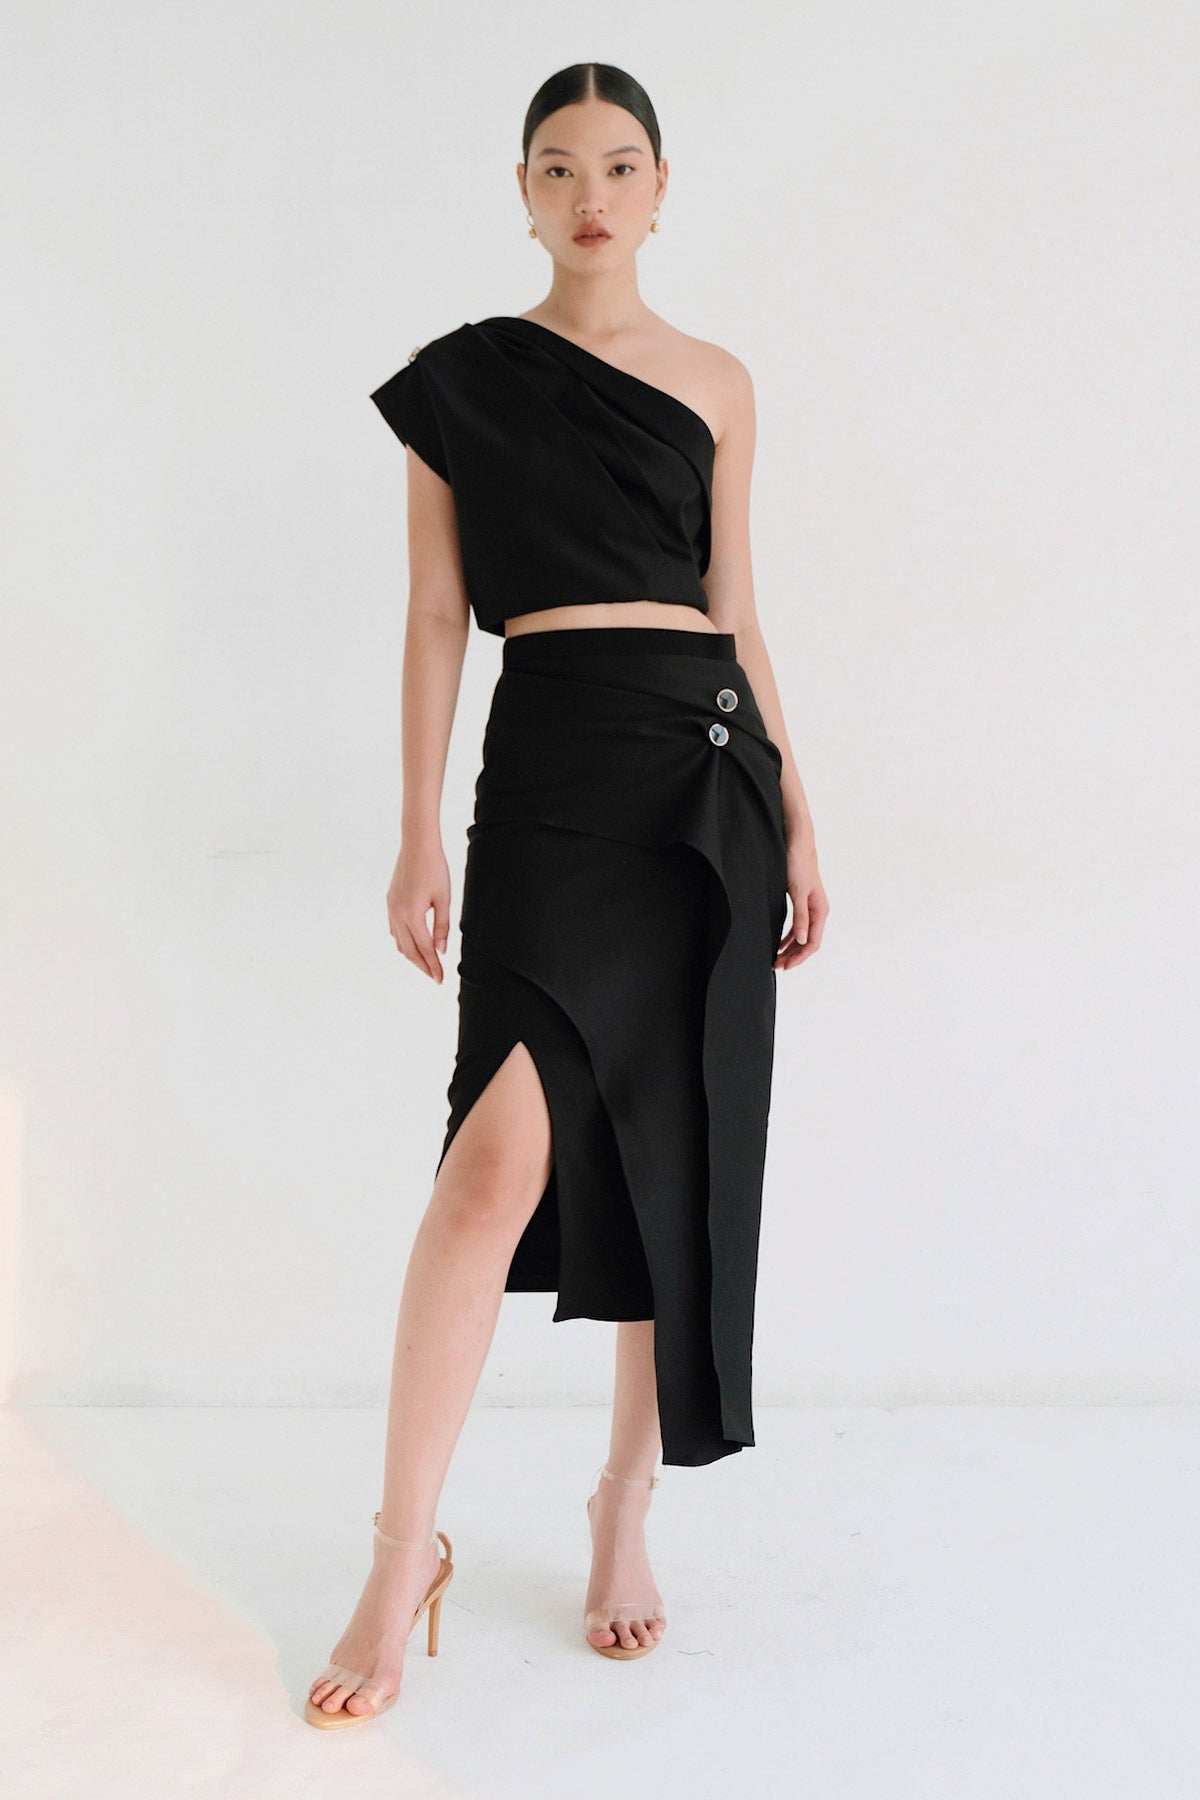 Mira Skirt In Black (LAST PIECE)